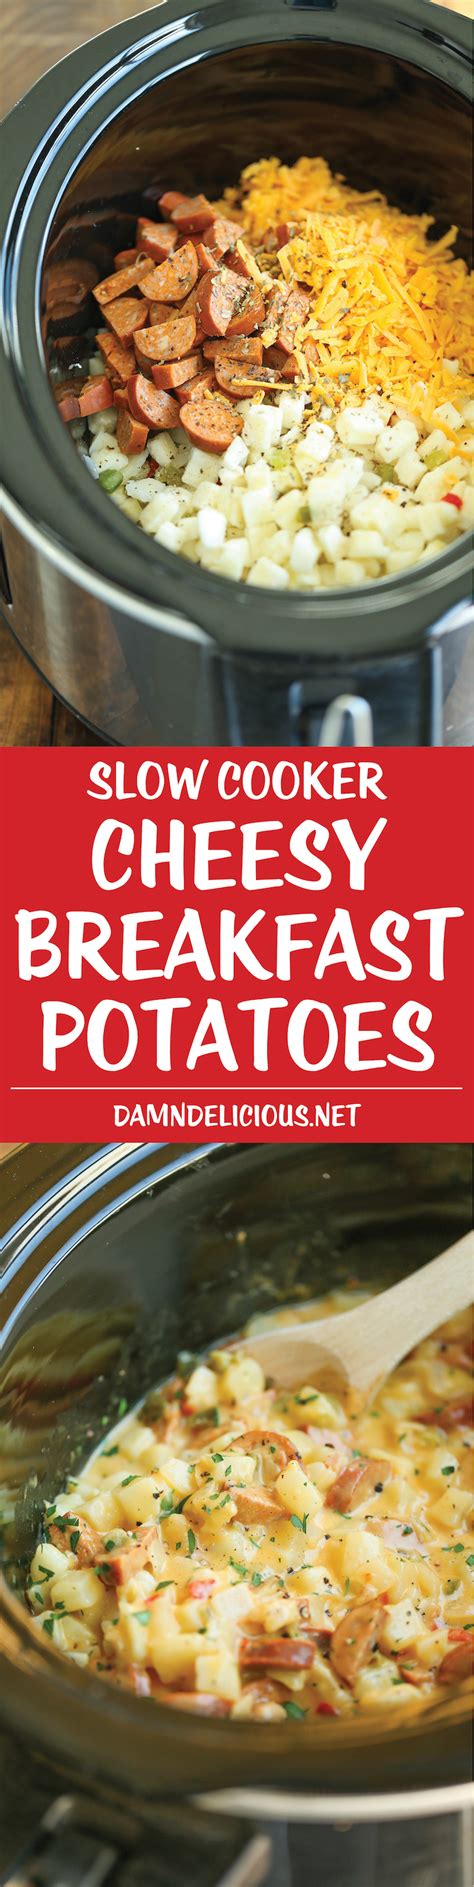 Slow Cooker Cheesy Breakfast Potatoes Damn Delicious